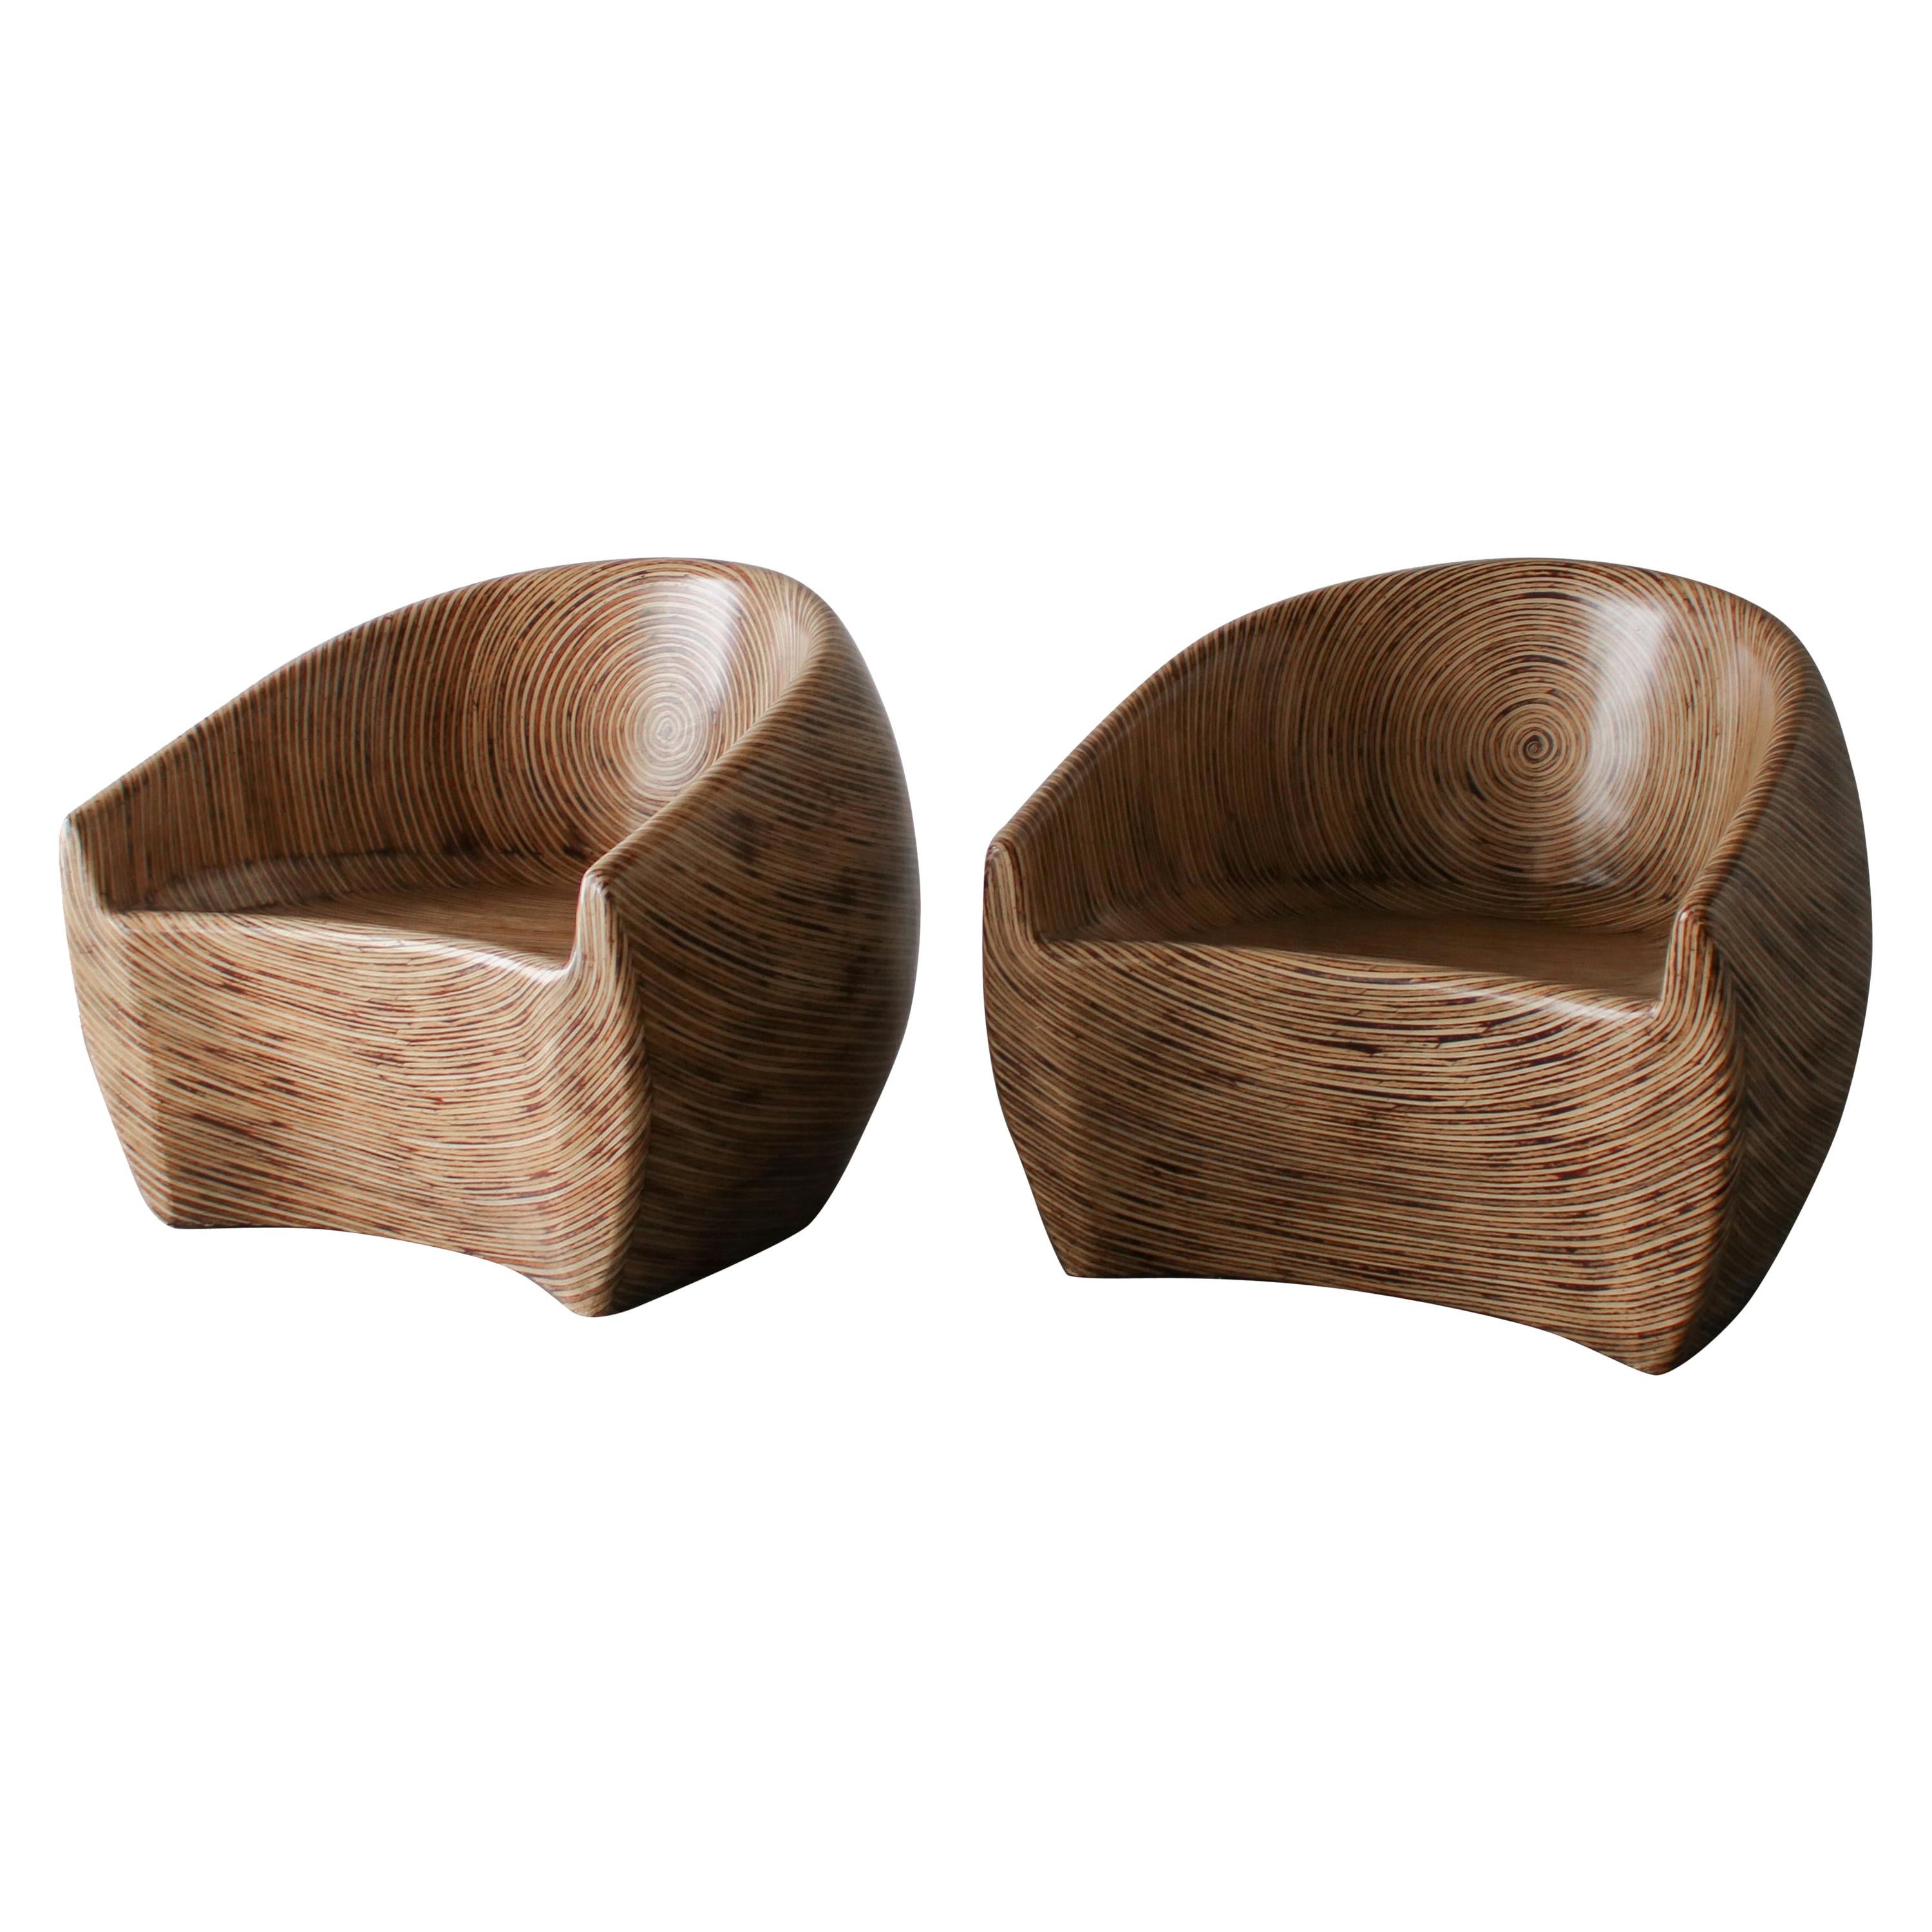 Pair of Barrel Chairs by Clayton Tugunon for Snug